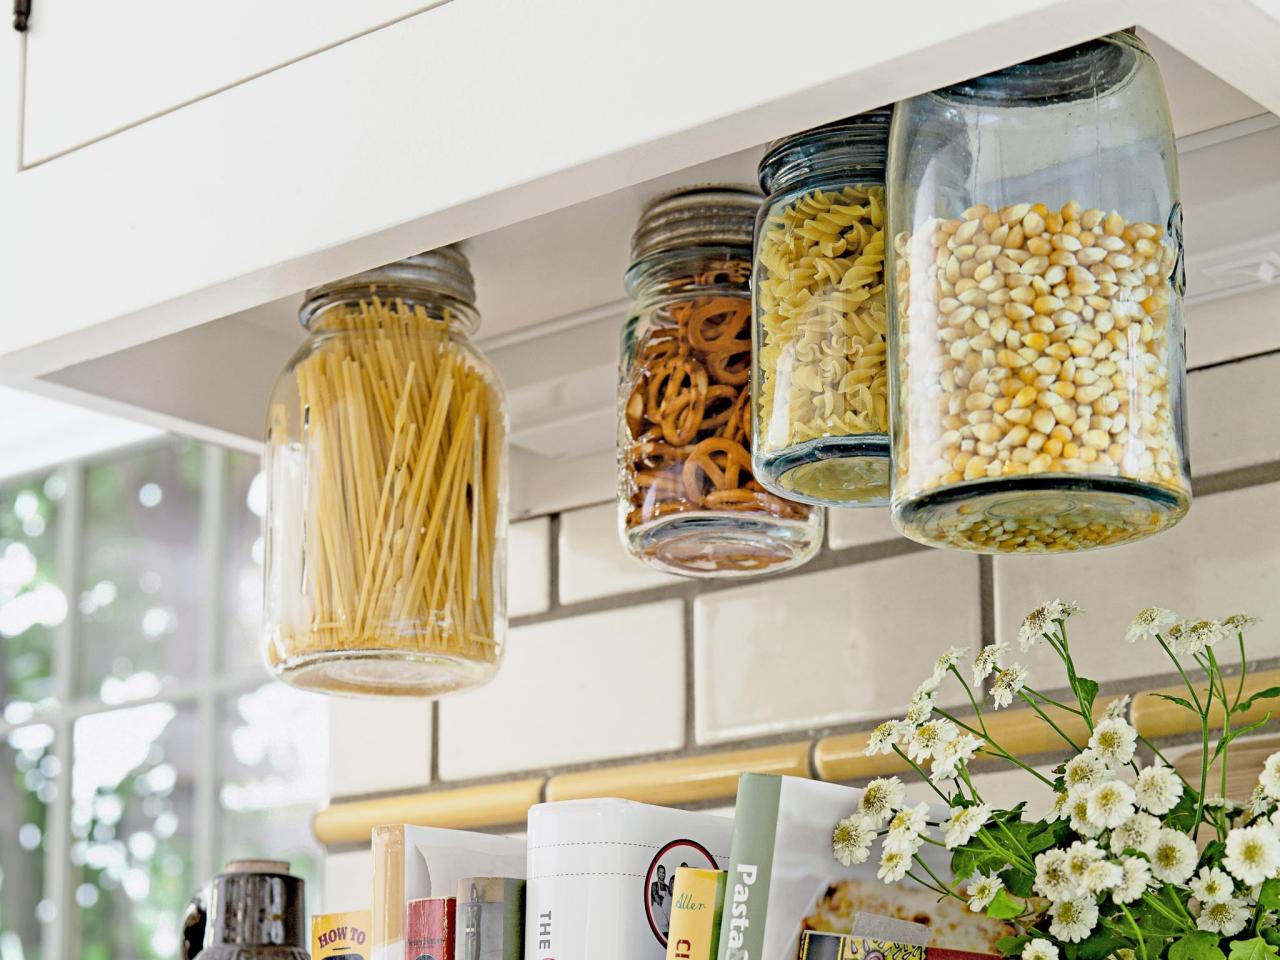 Creative Kitchen Storage and Pantry Organization Ideas